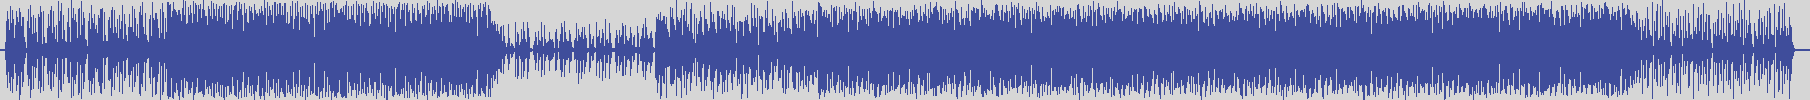 nf_boyz_records [NFY079] Electronique 44 - Do It [Marine Seven Mix] audio wave form